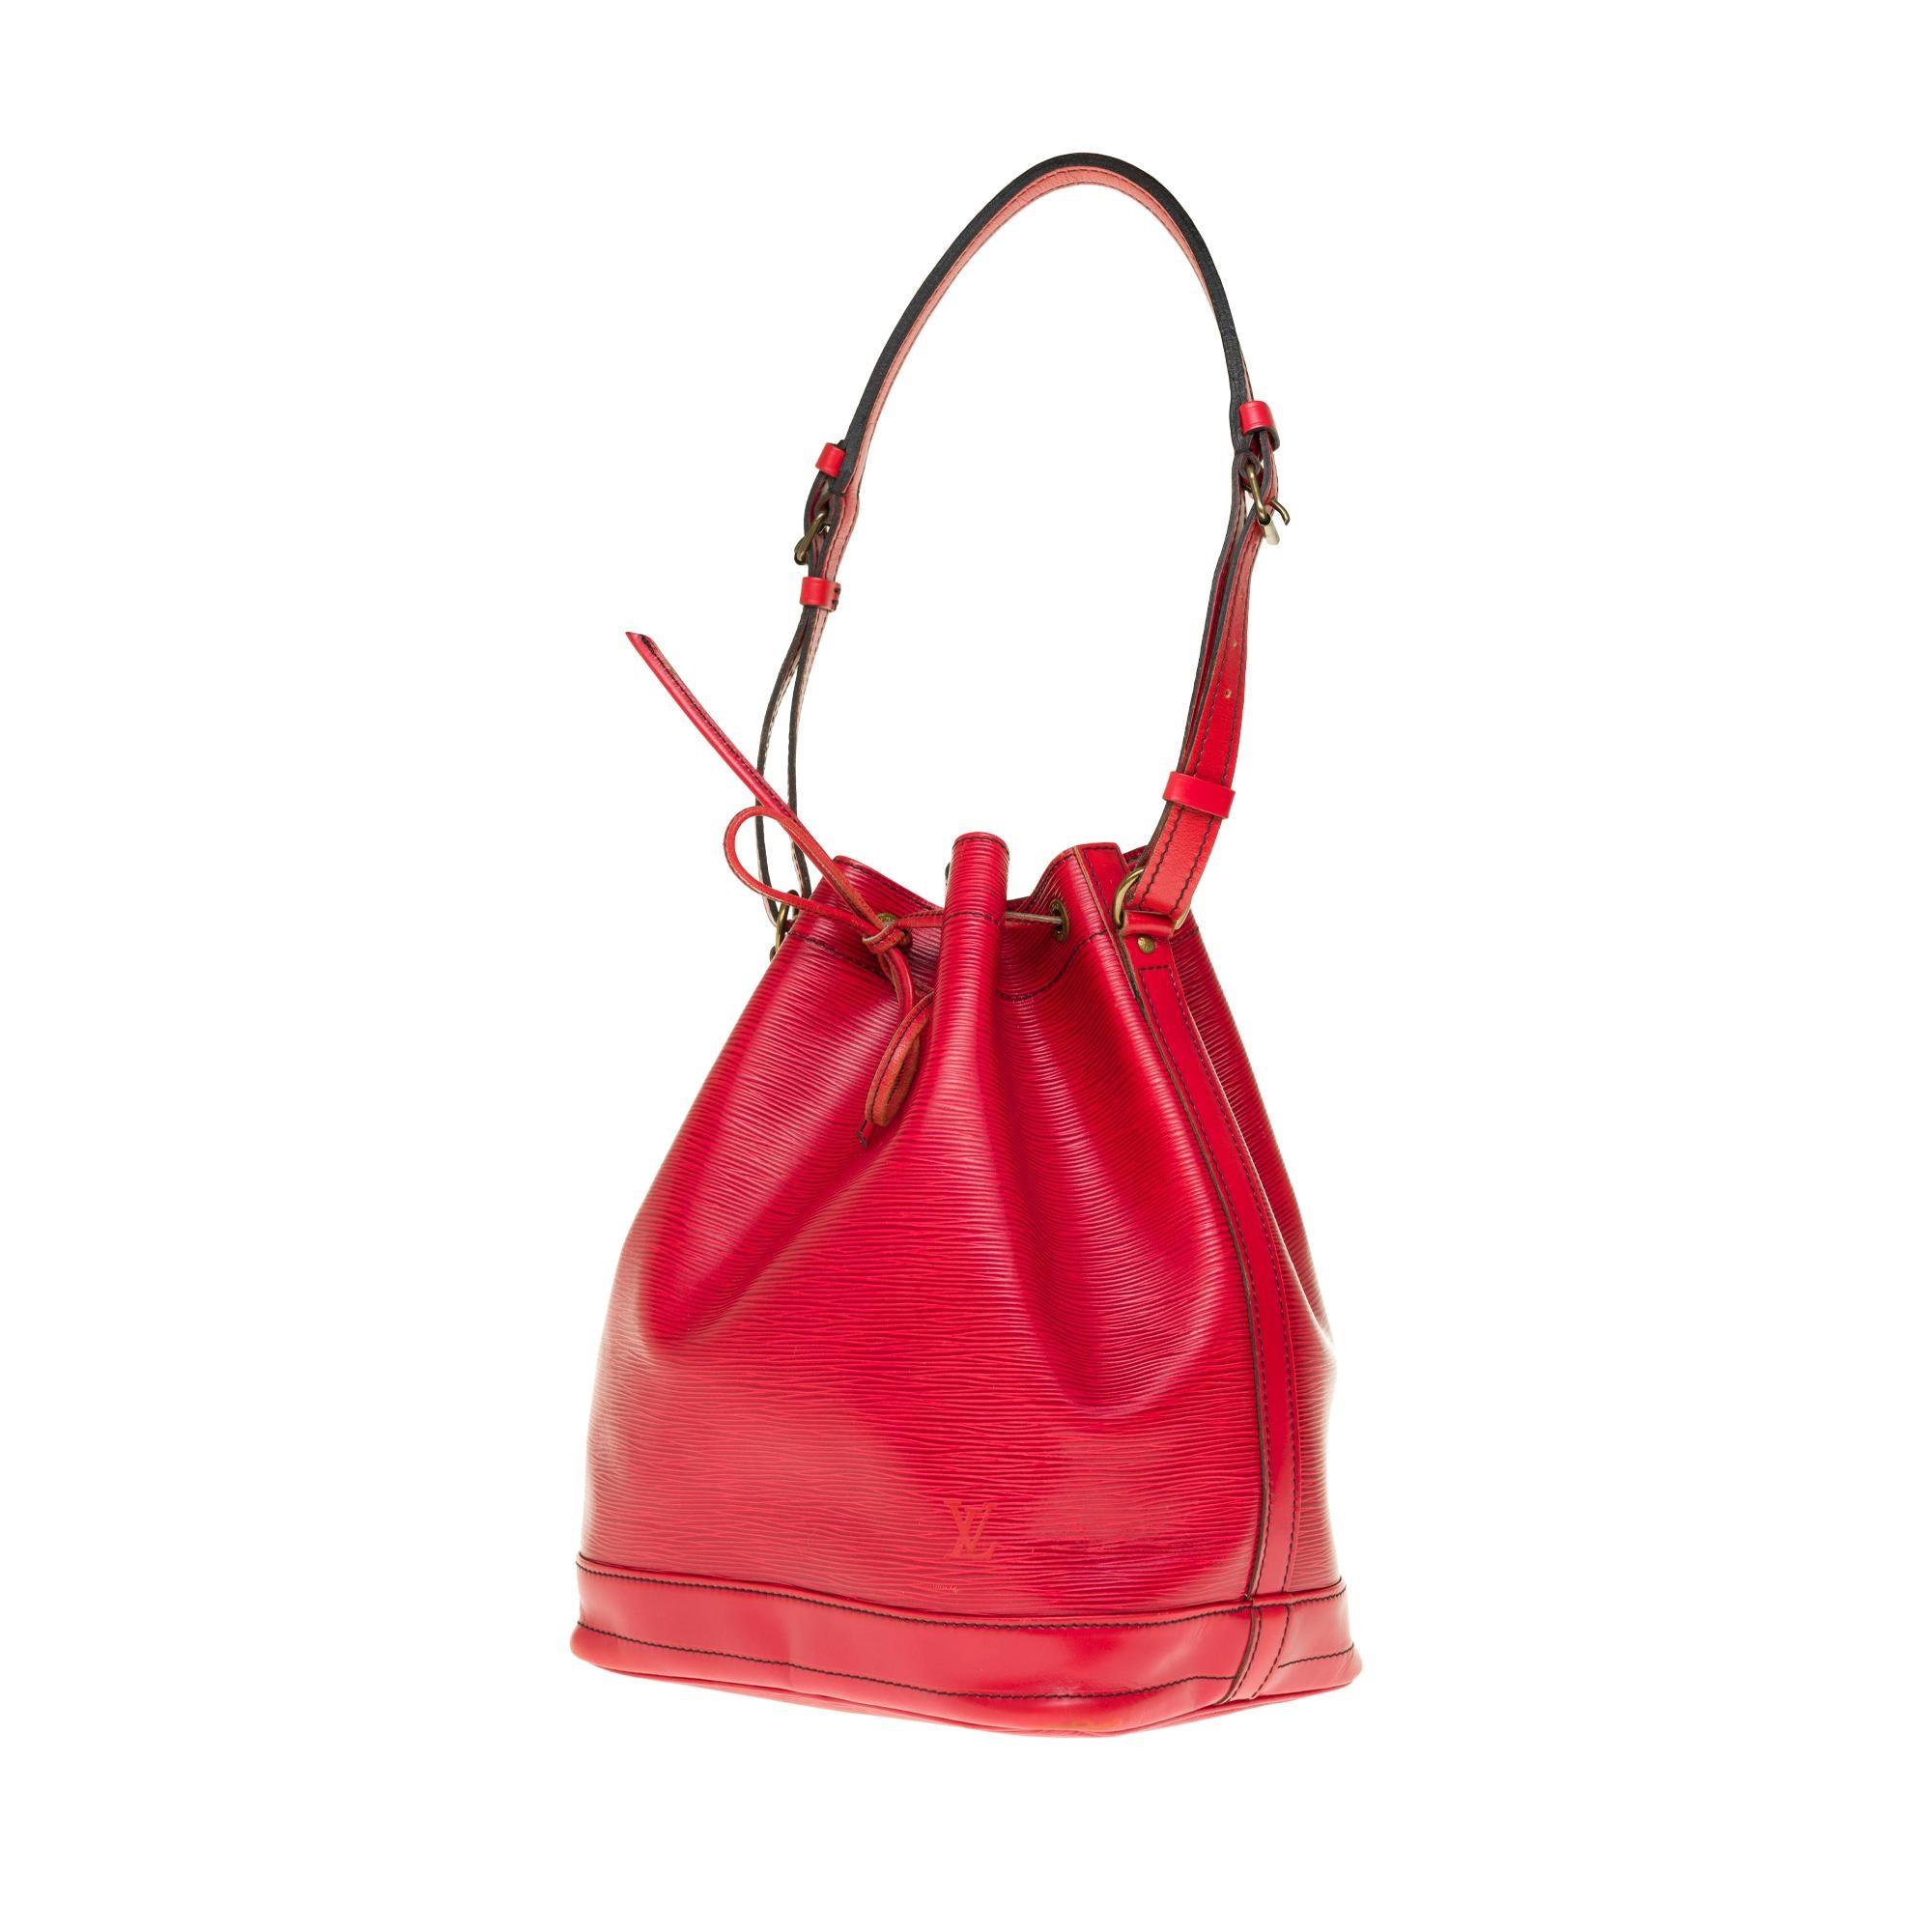 Red Louis Vuitton Noé Grand modele shoulder bag in red epi leather, gold hardware